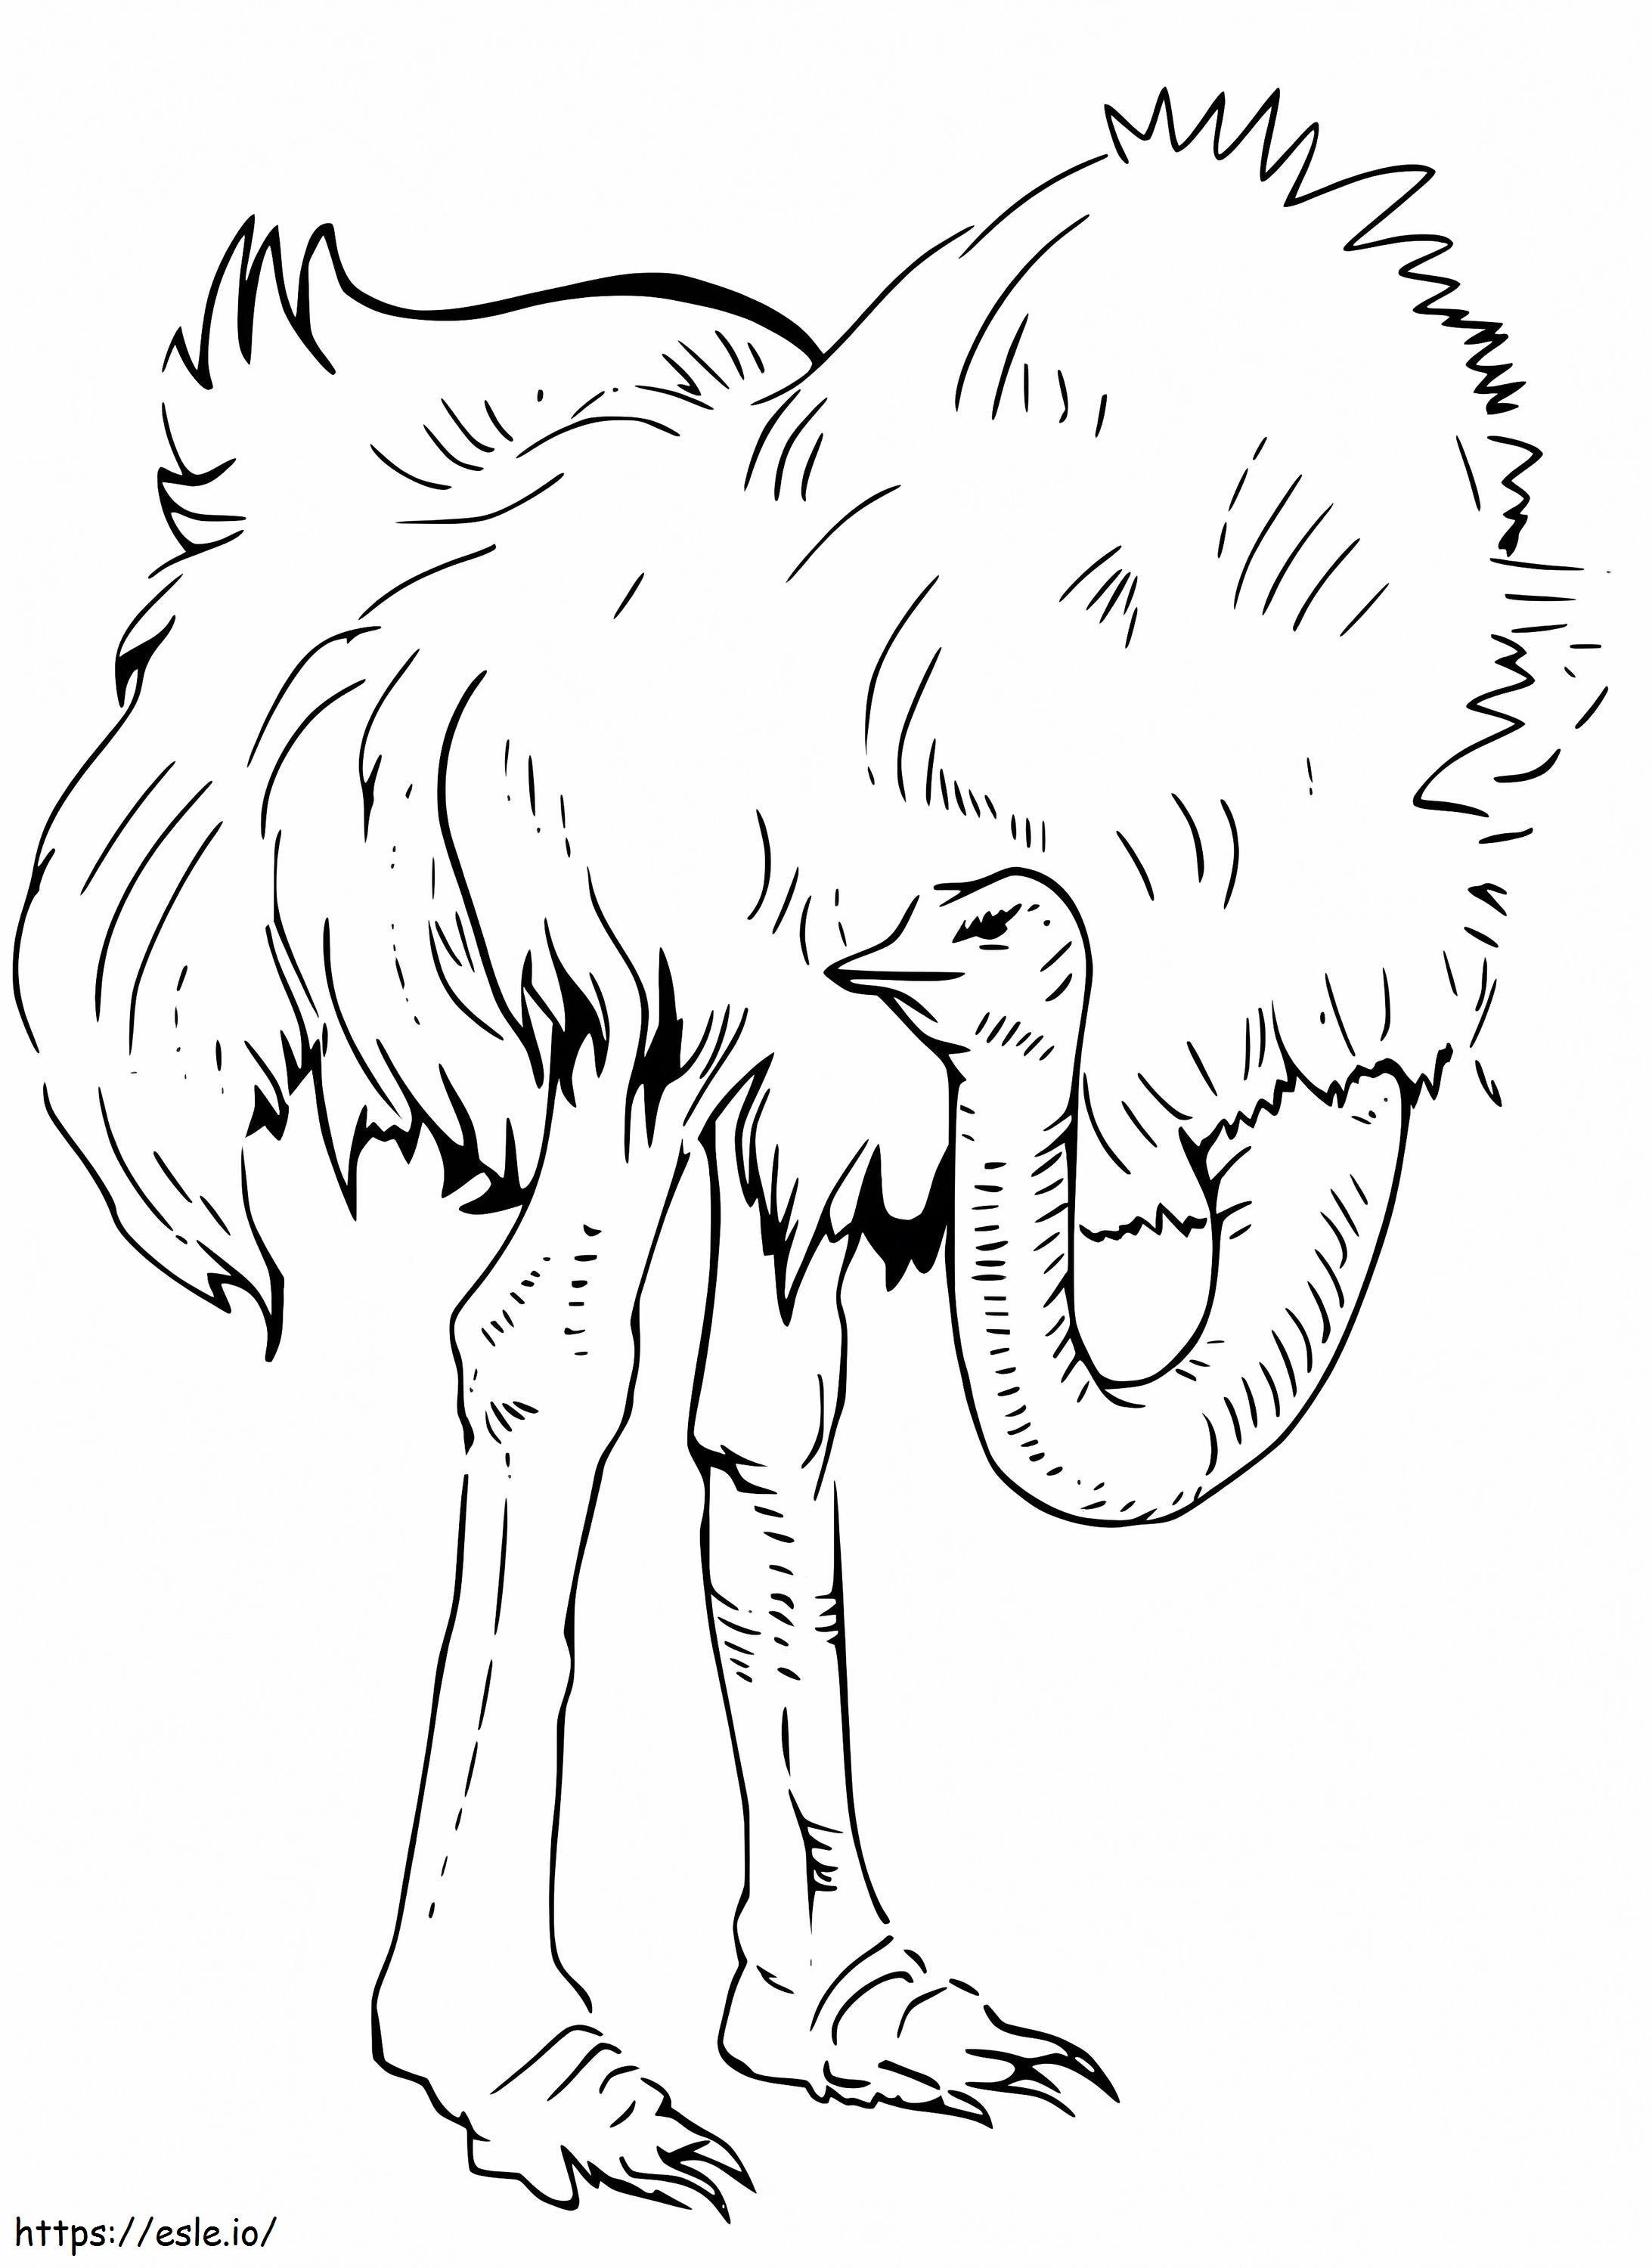 Big Emu coloring page